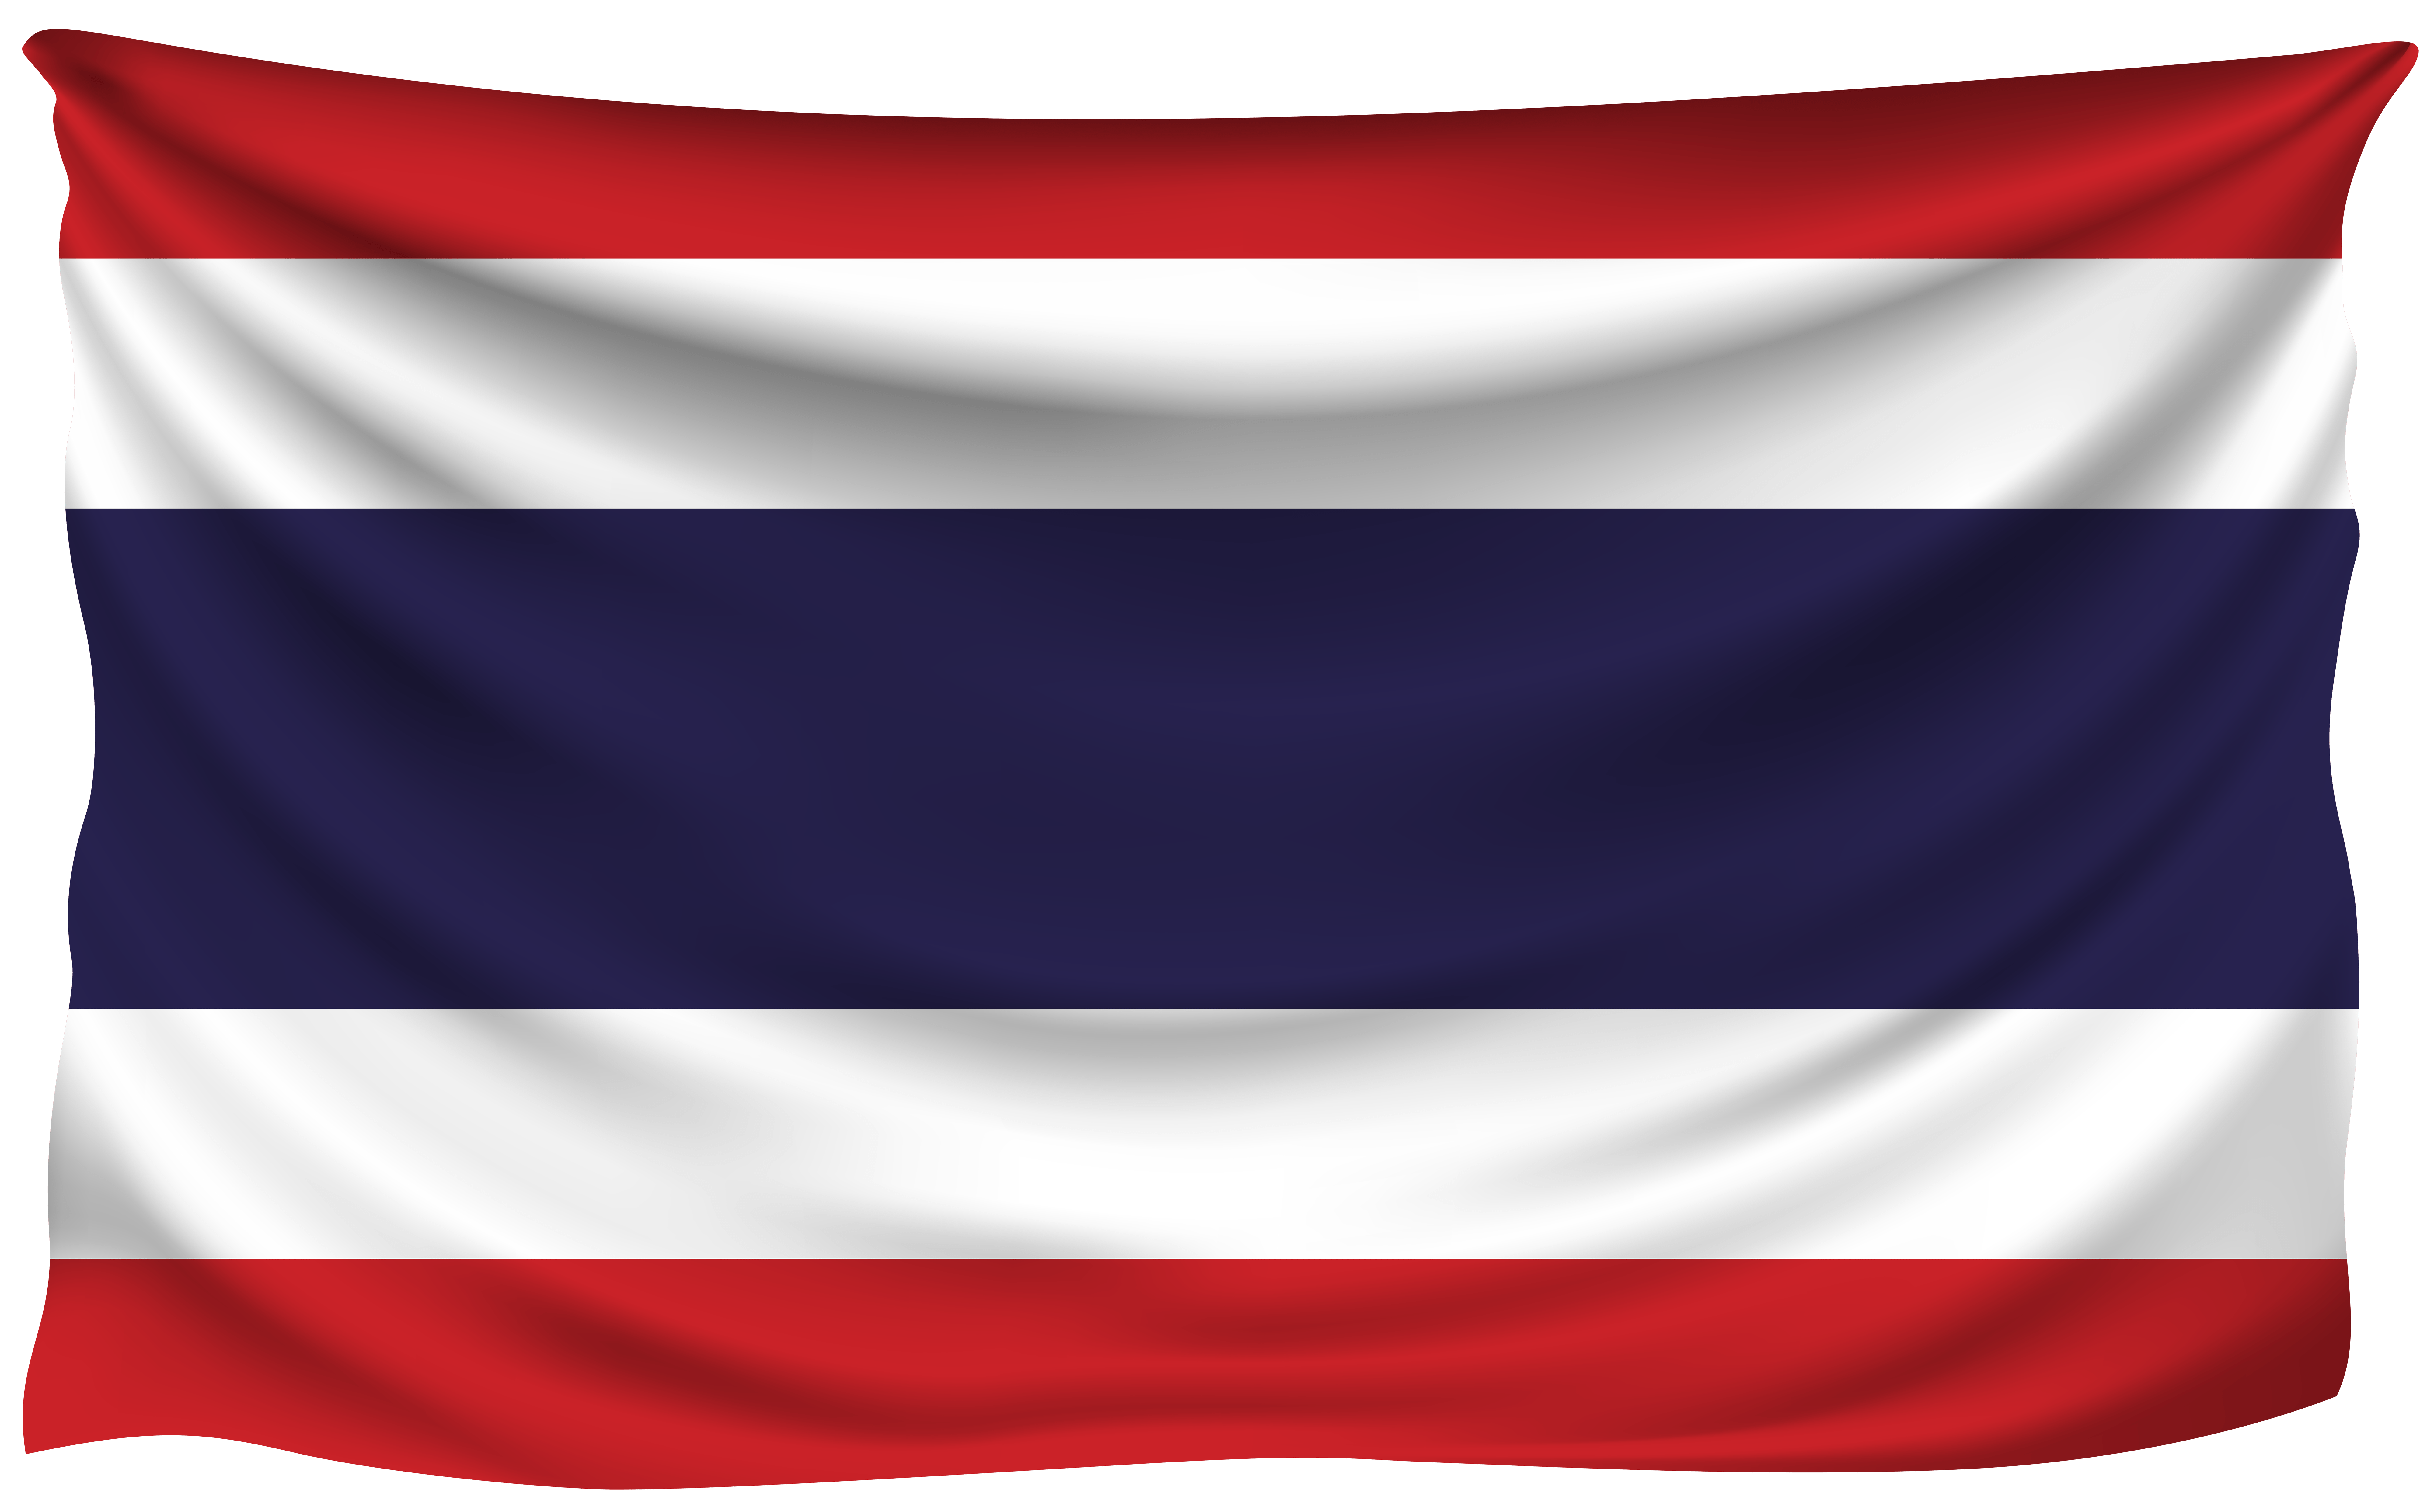 Thailand Wrinkled Flag Quality Image